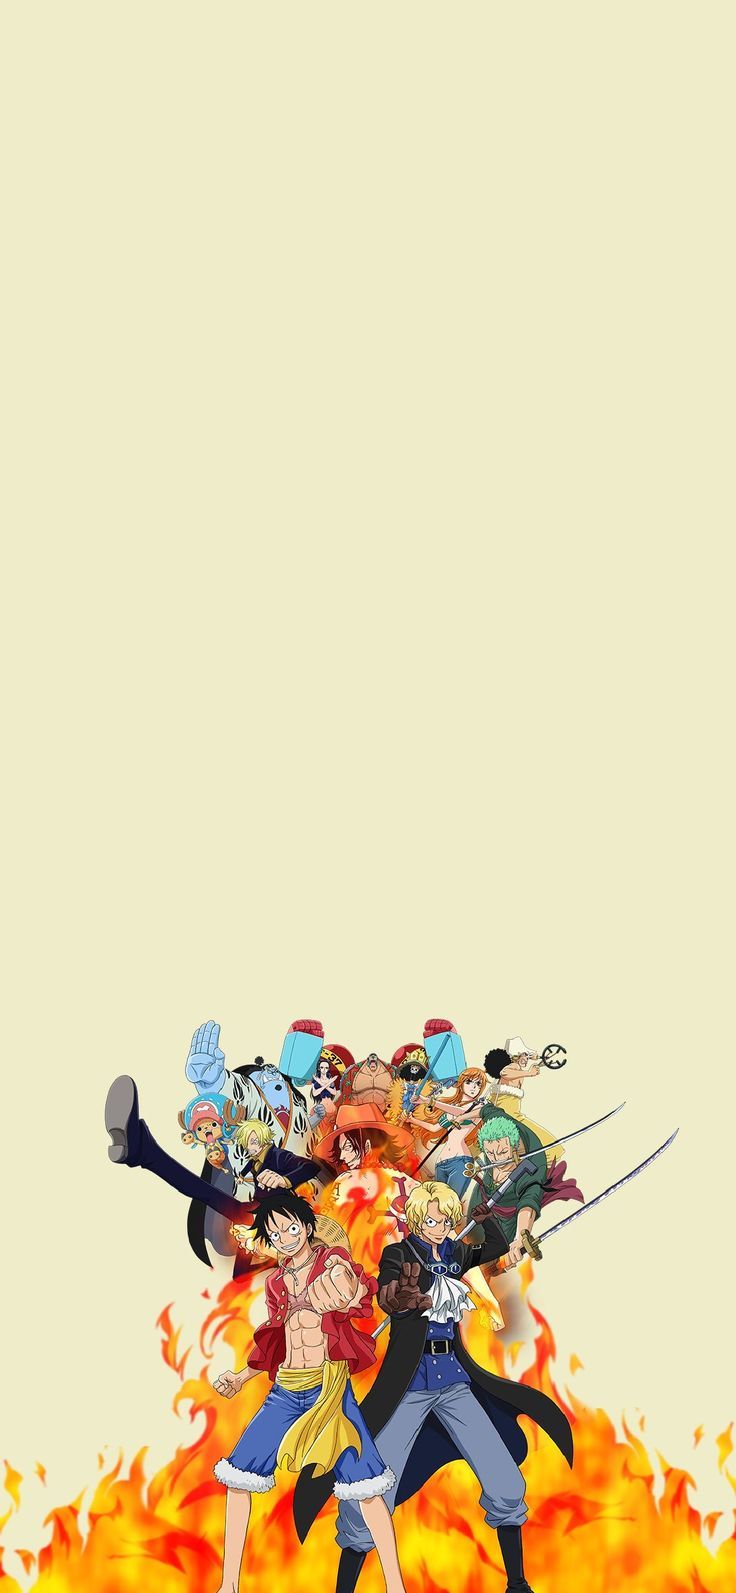 One Piece crew wallpaper. One piece crew, Wallpaper, One piece anime